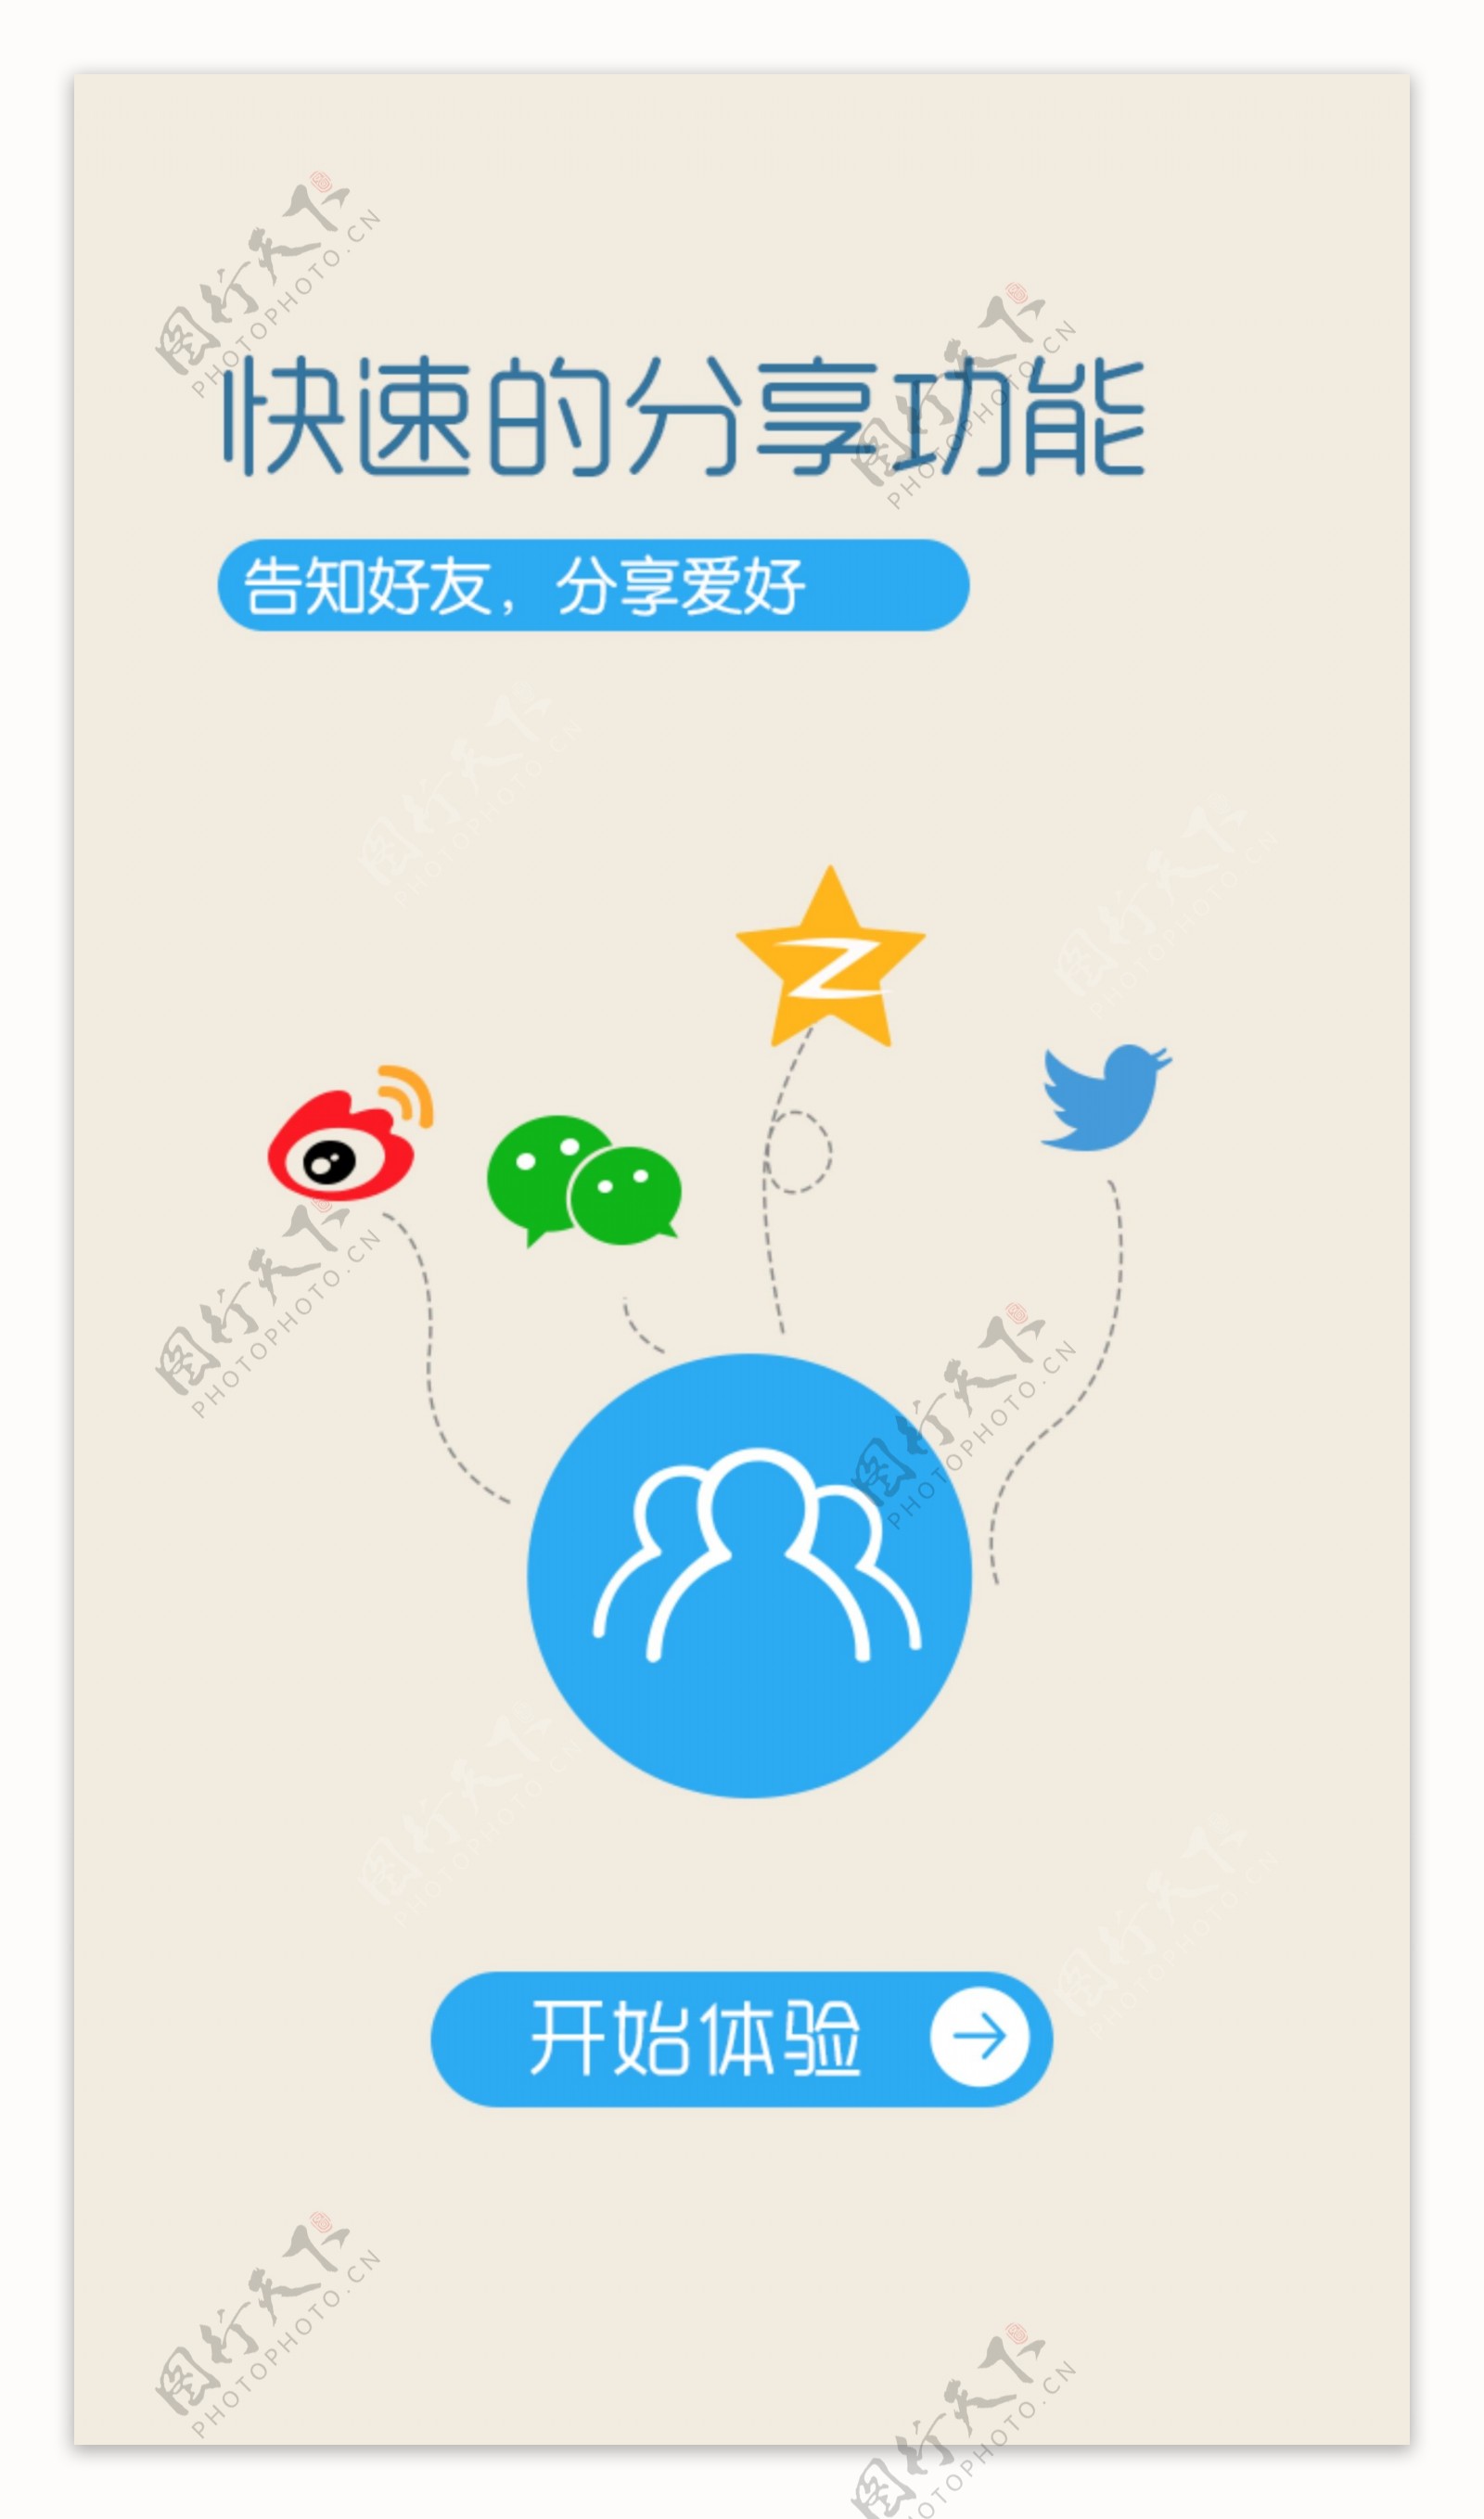 iPhone5app周公解梦引导源文件